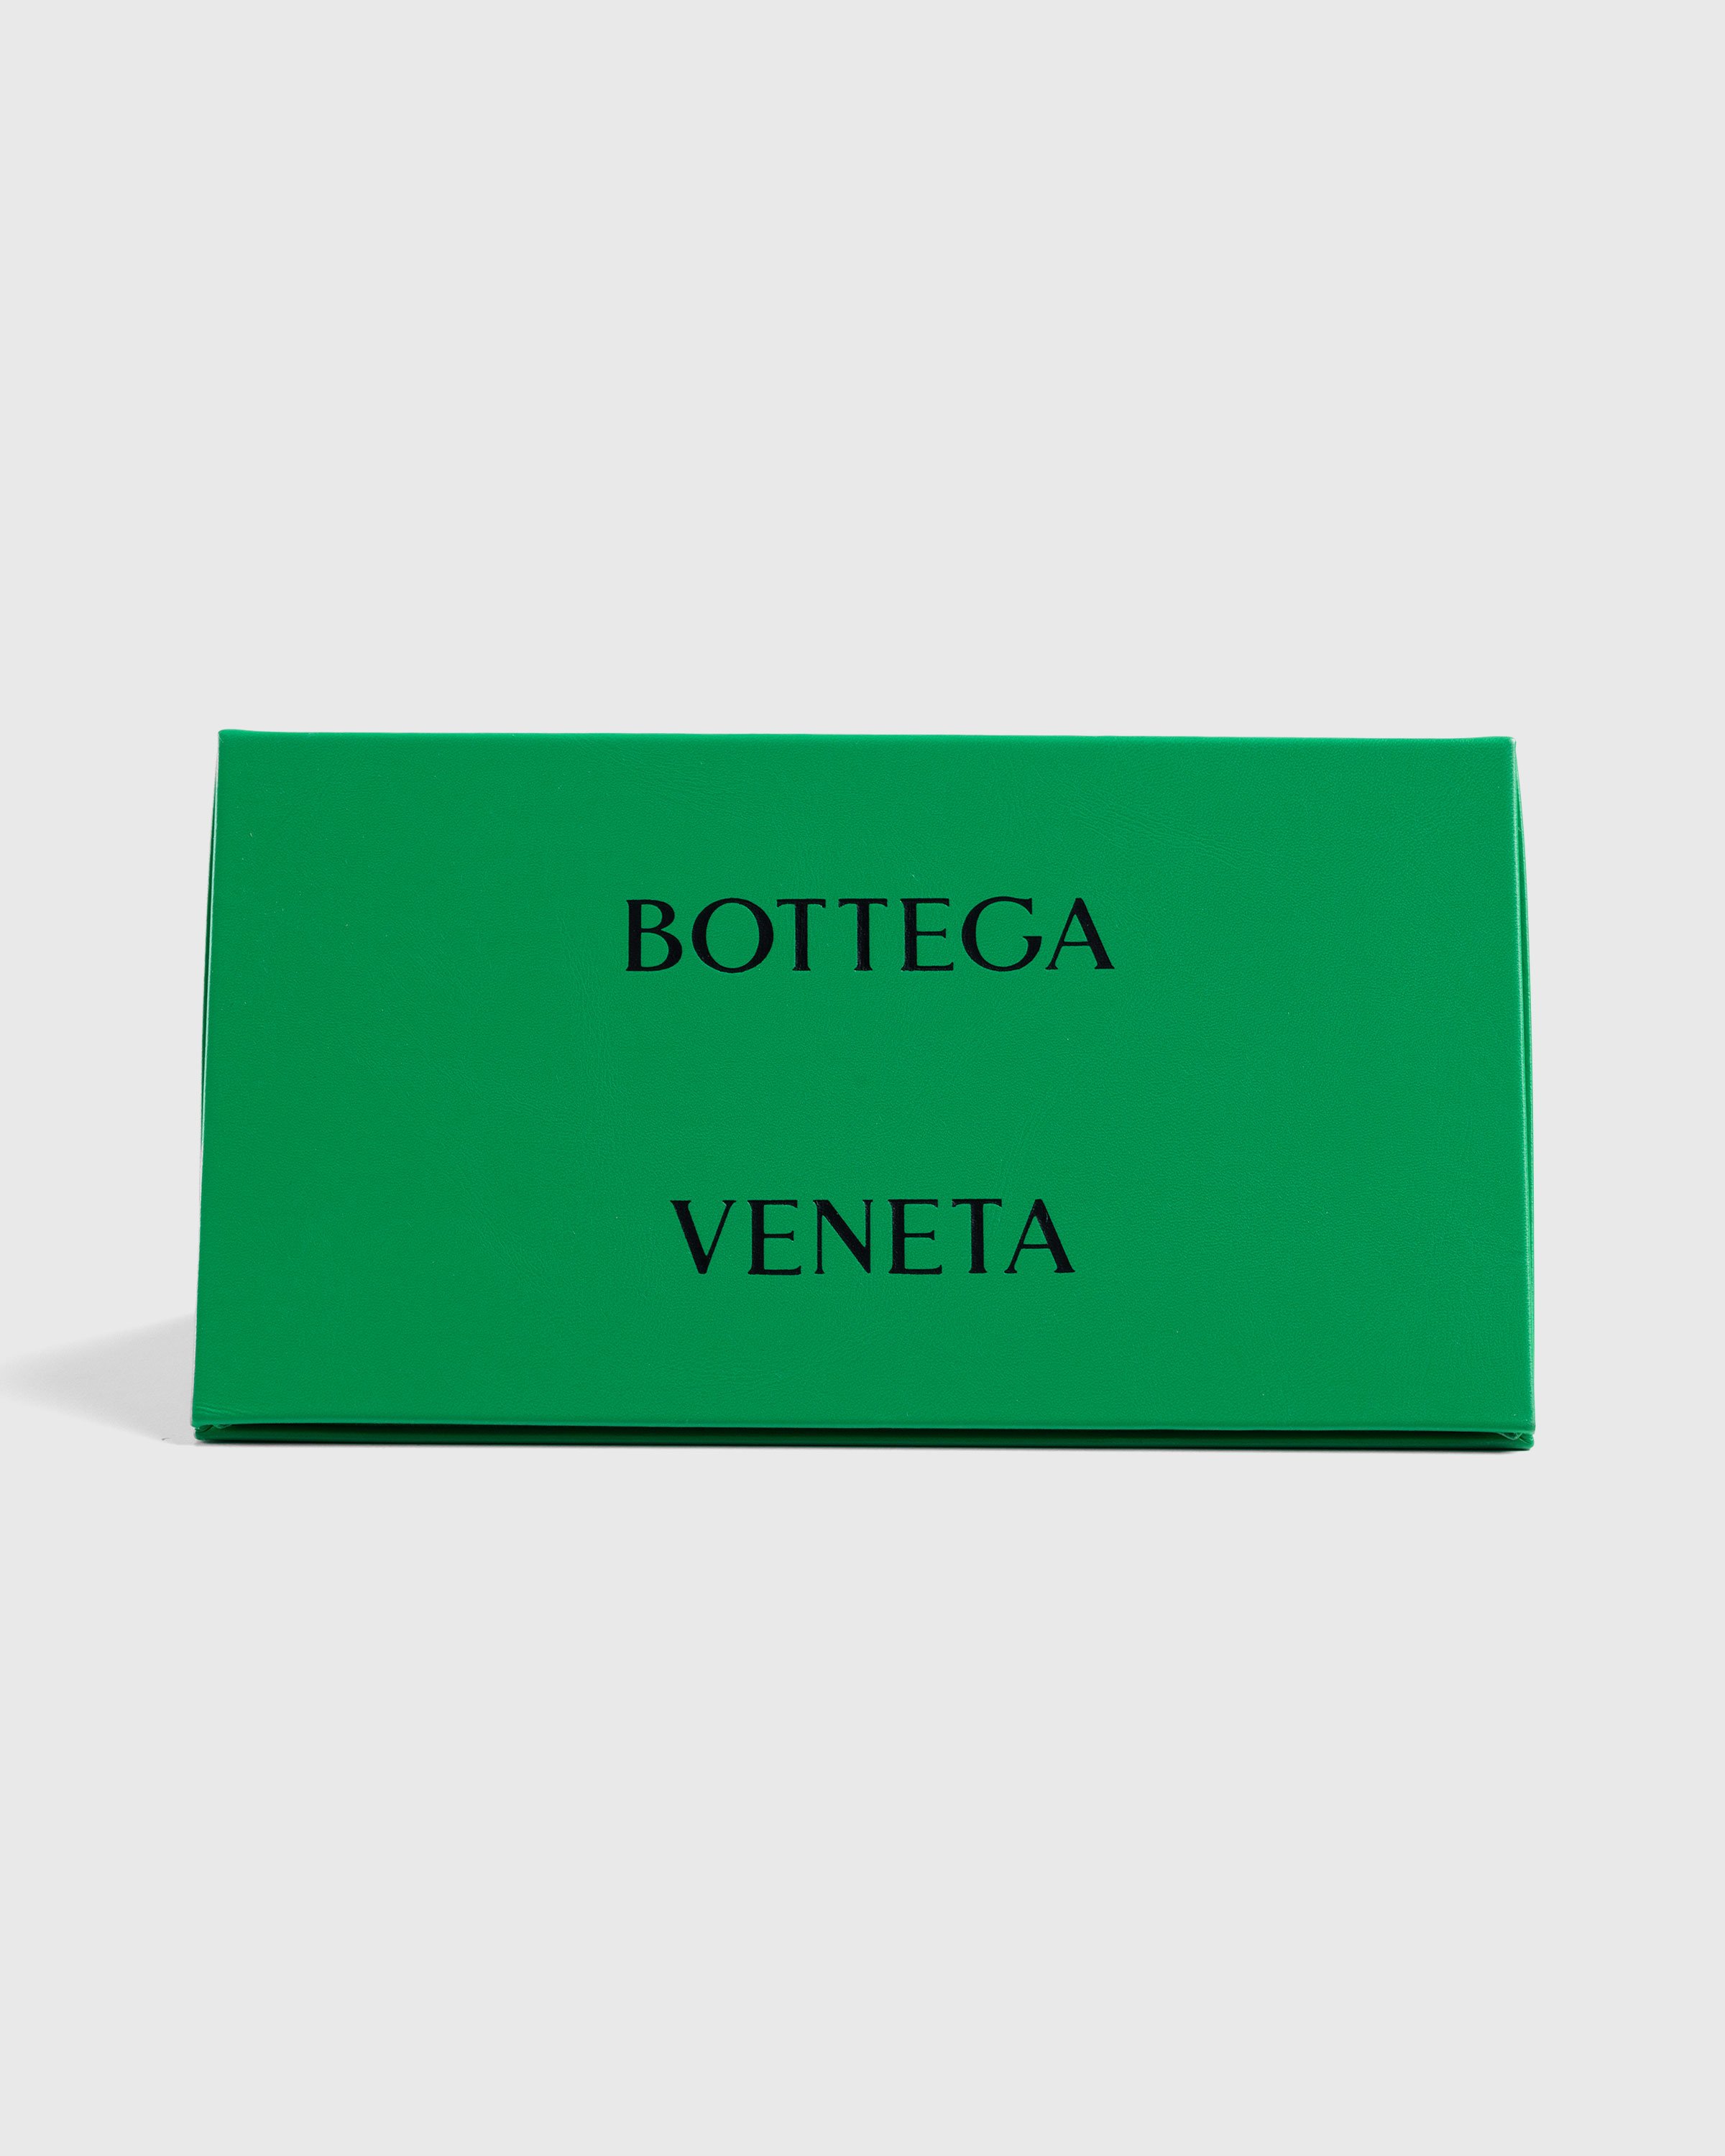 Bottega Veneta - Classic Square Sunglasses Green/Green - Accessories - Green - Image 5